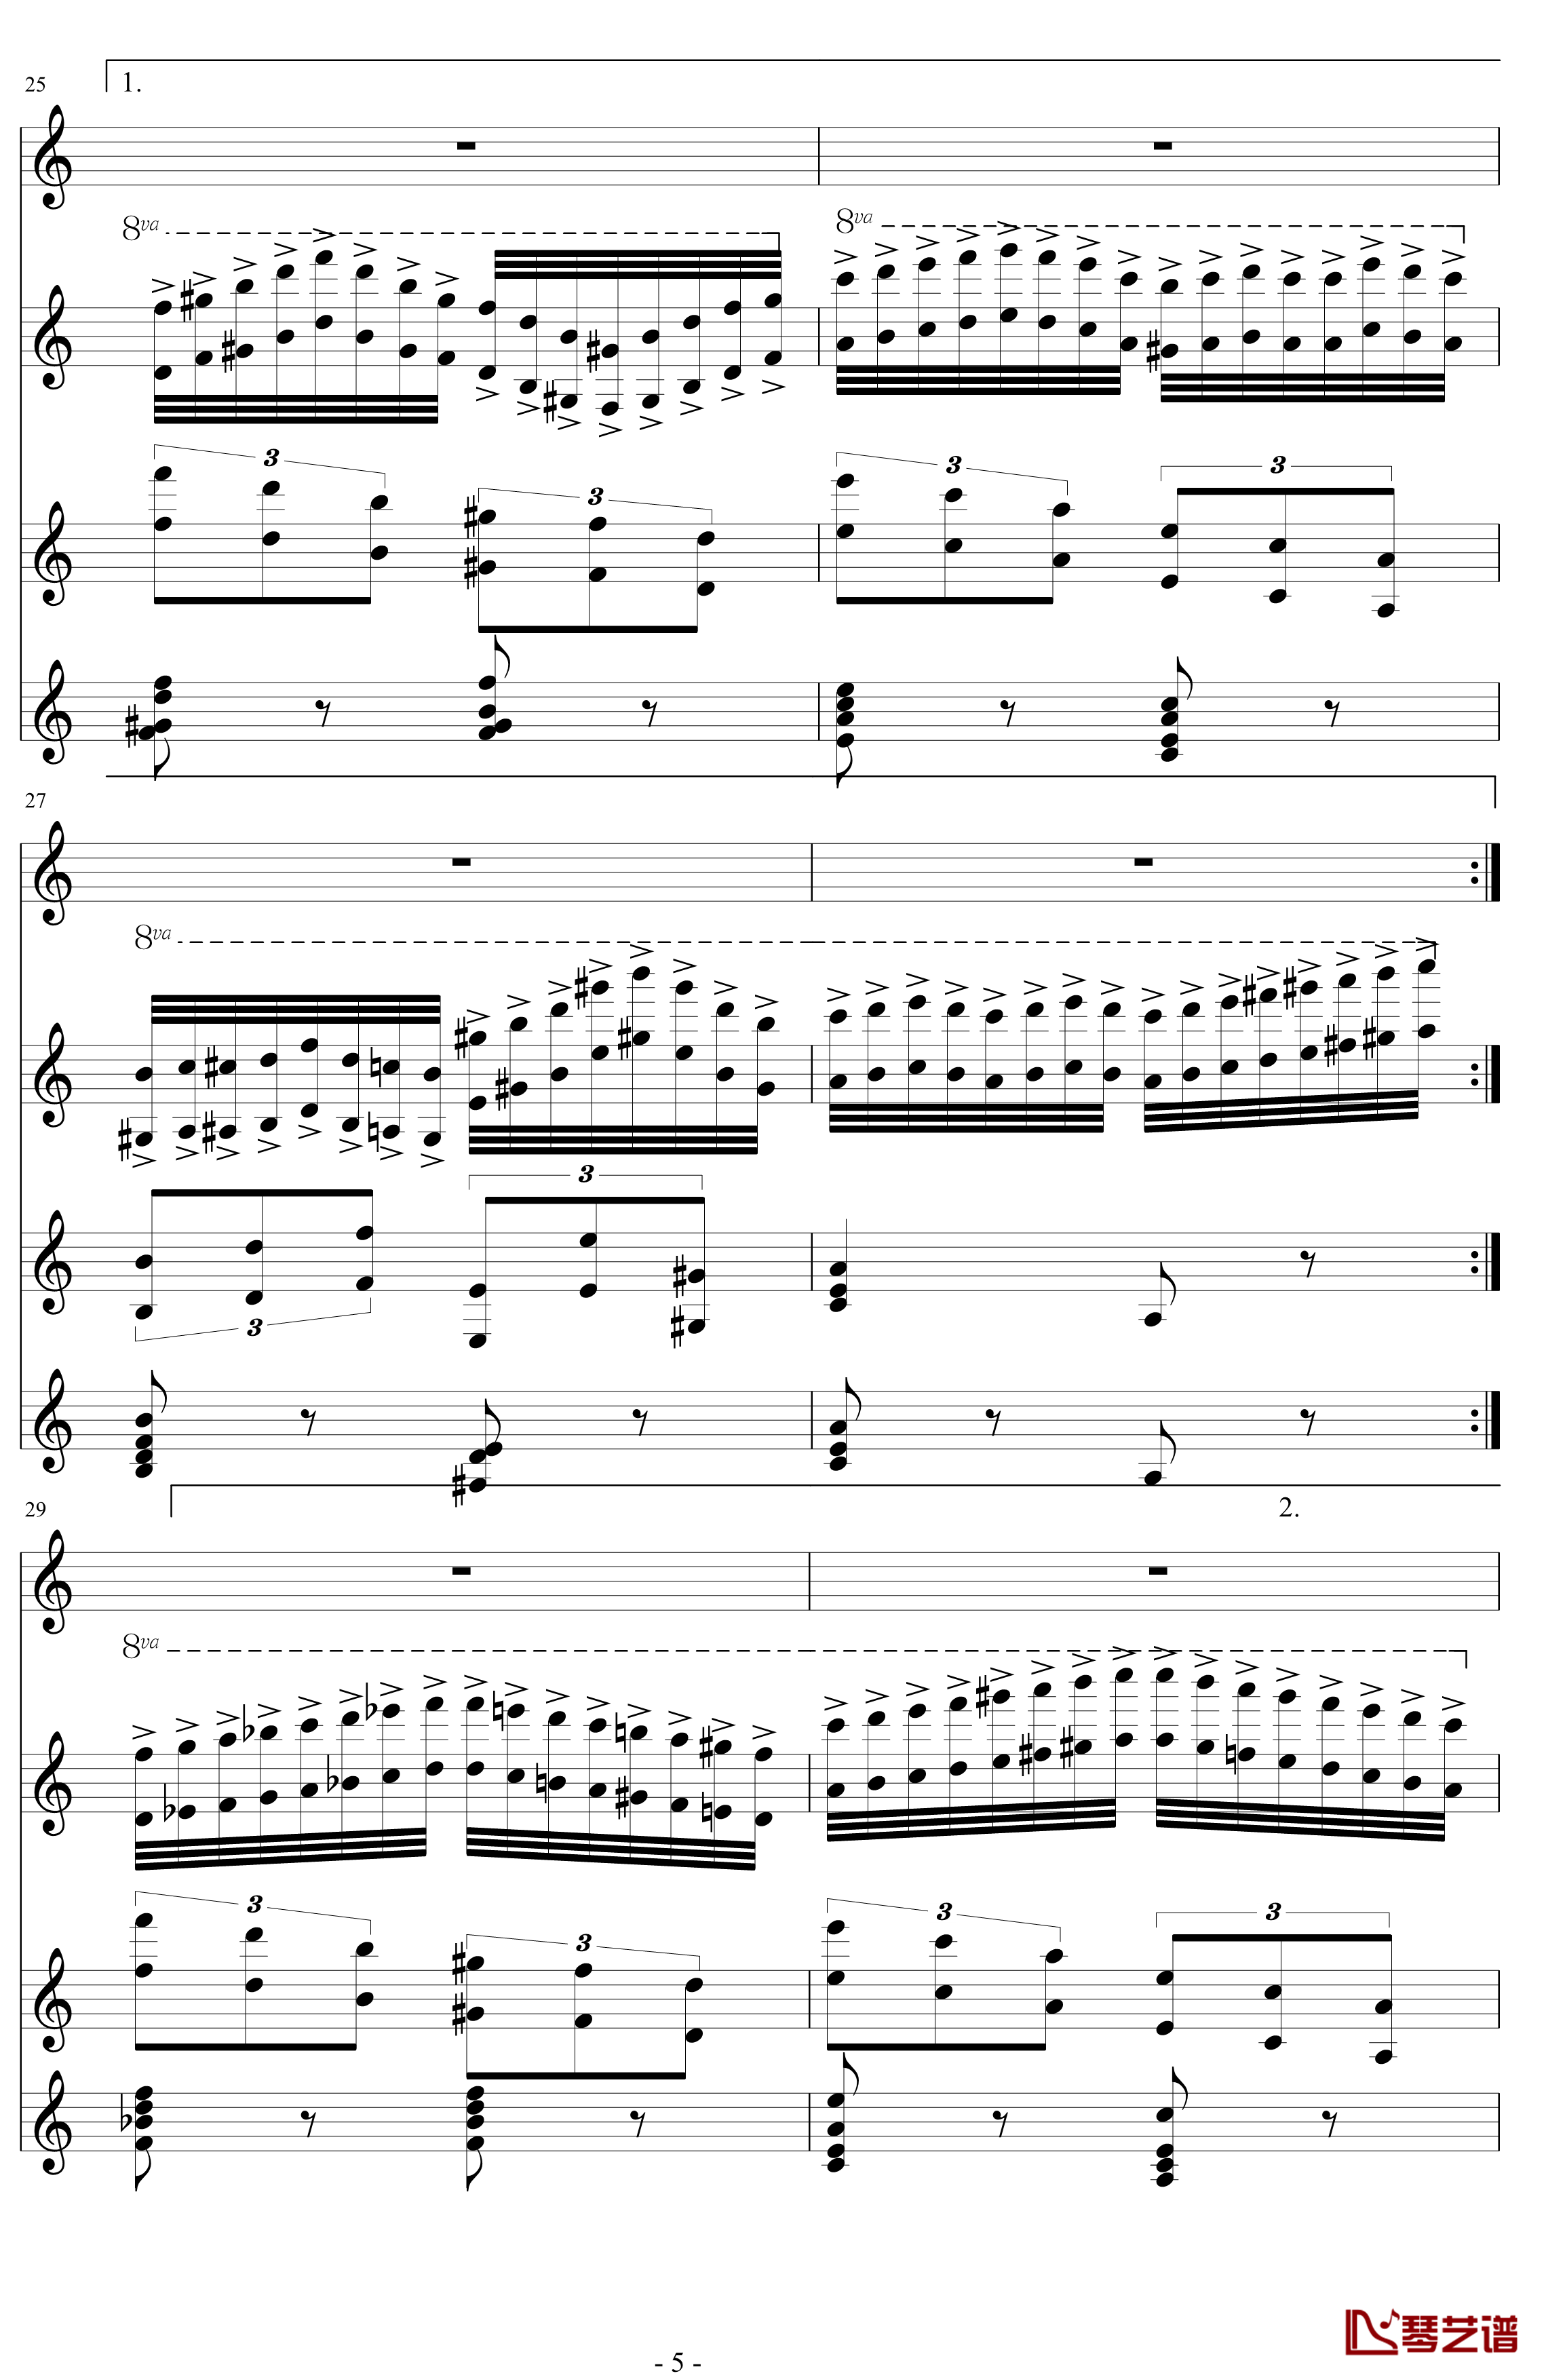 my Edition of Paganini'theme钢琴谱-未知分类5